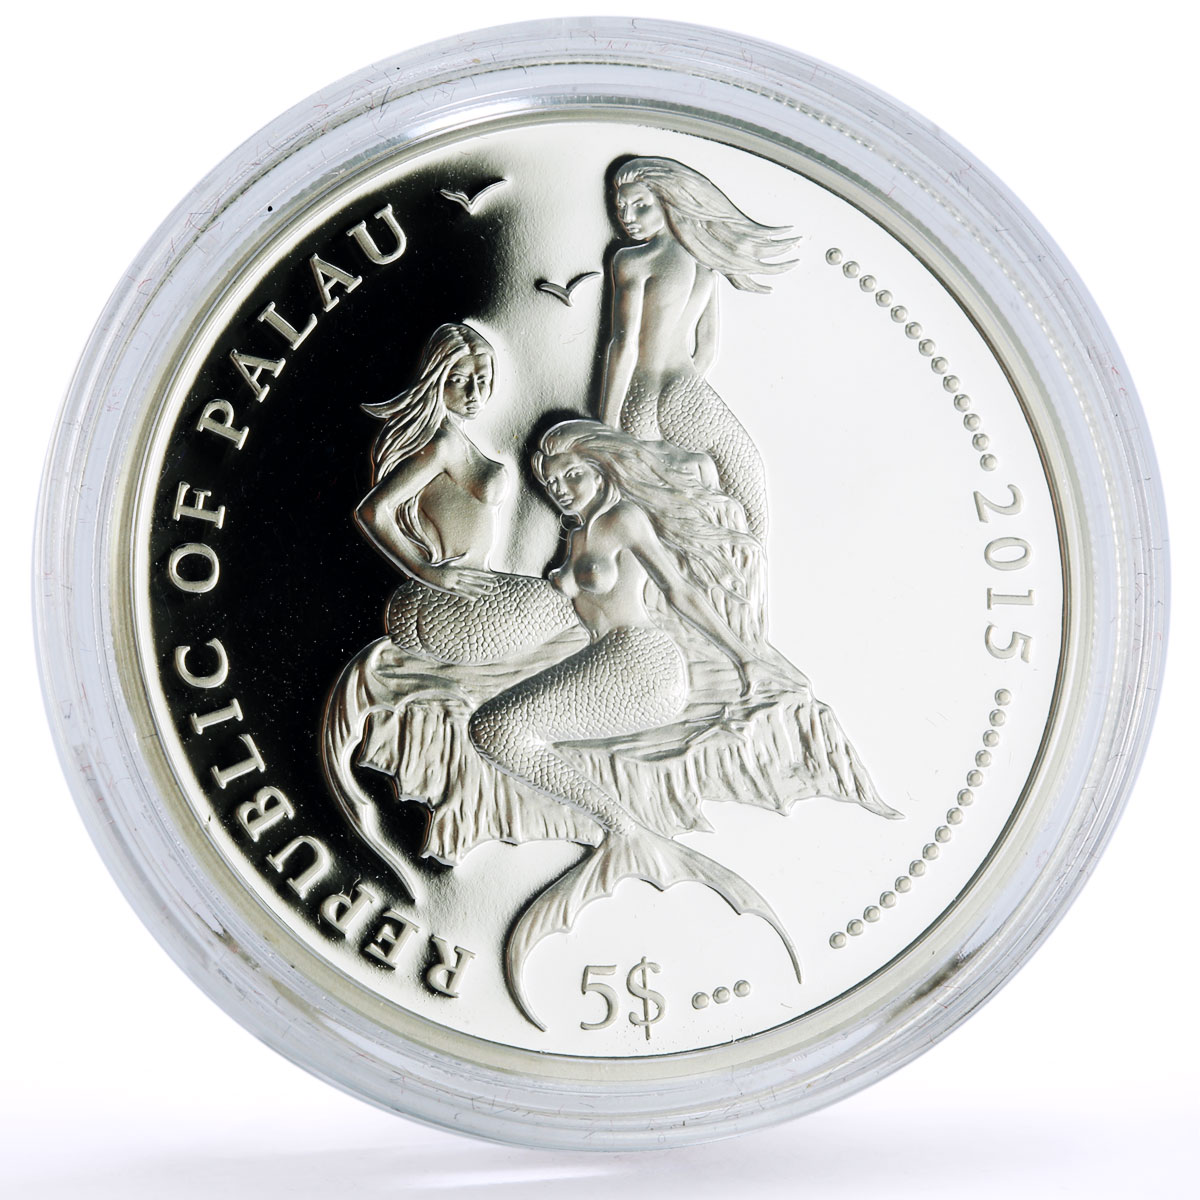 Palau 5 dollars Marine Life Protection Damselfish Fauna proof silver coin 2015